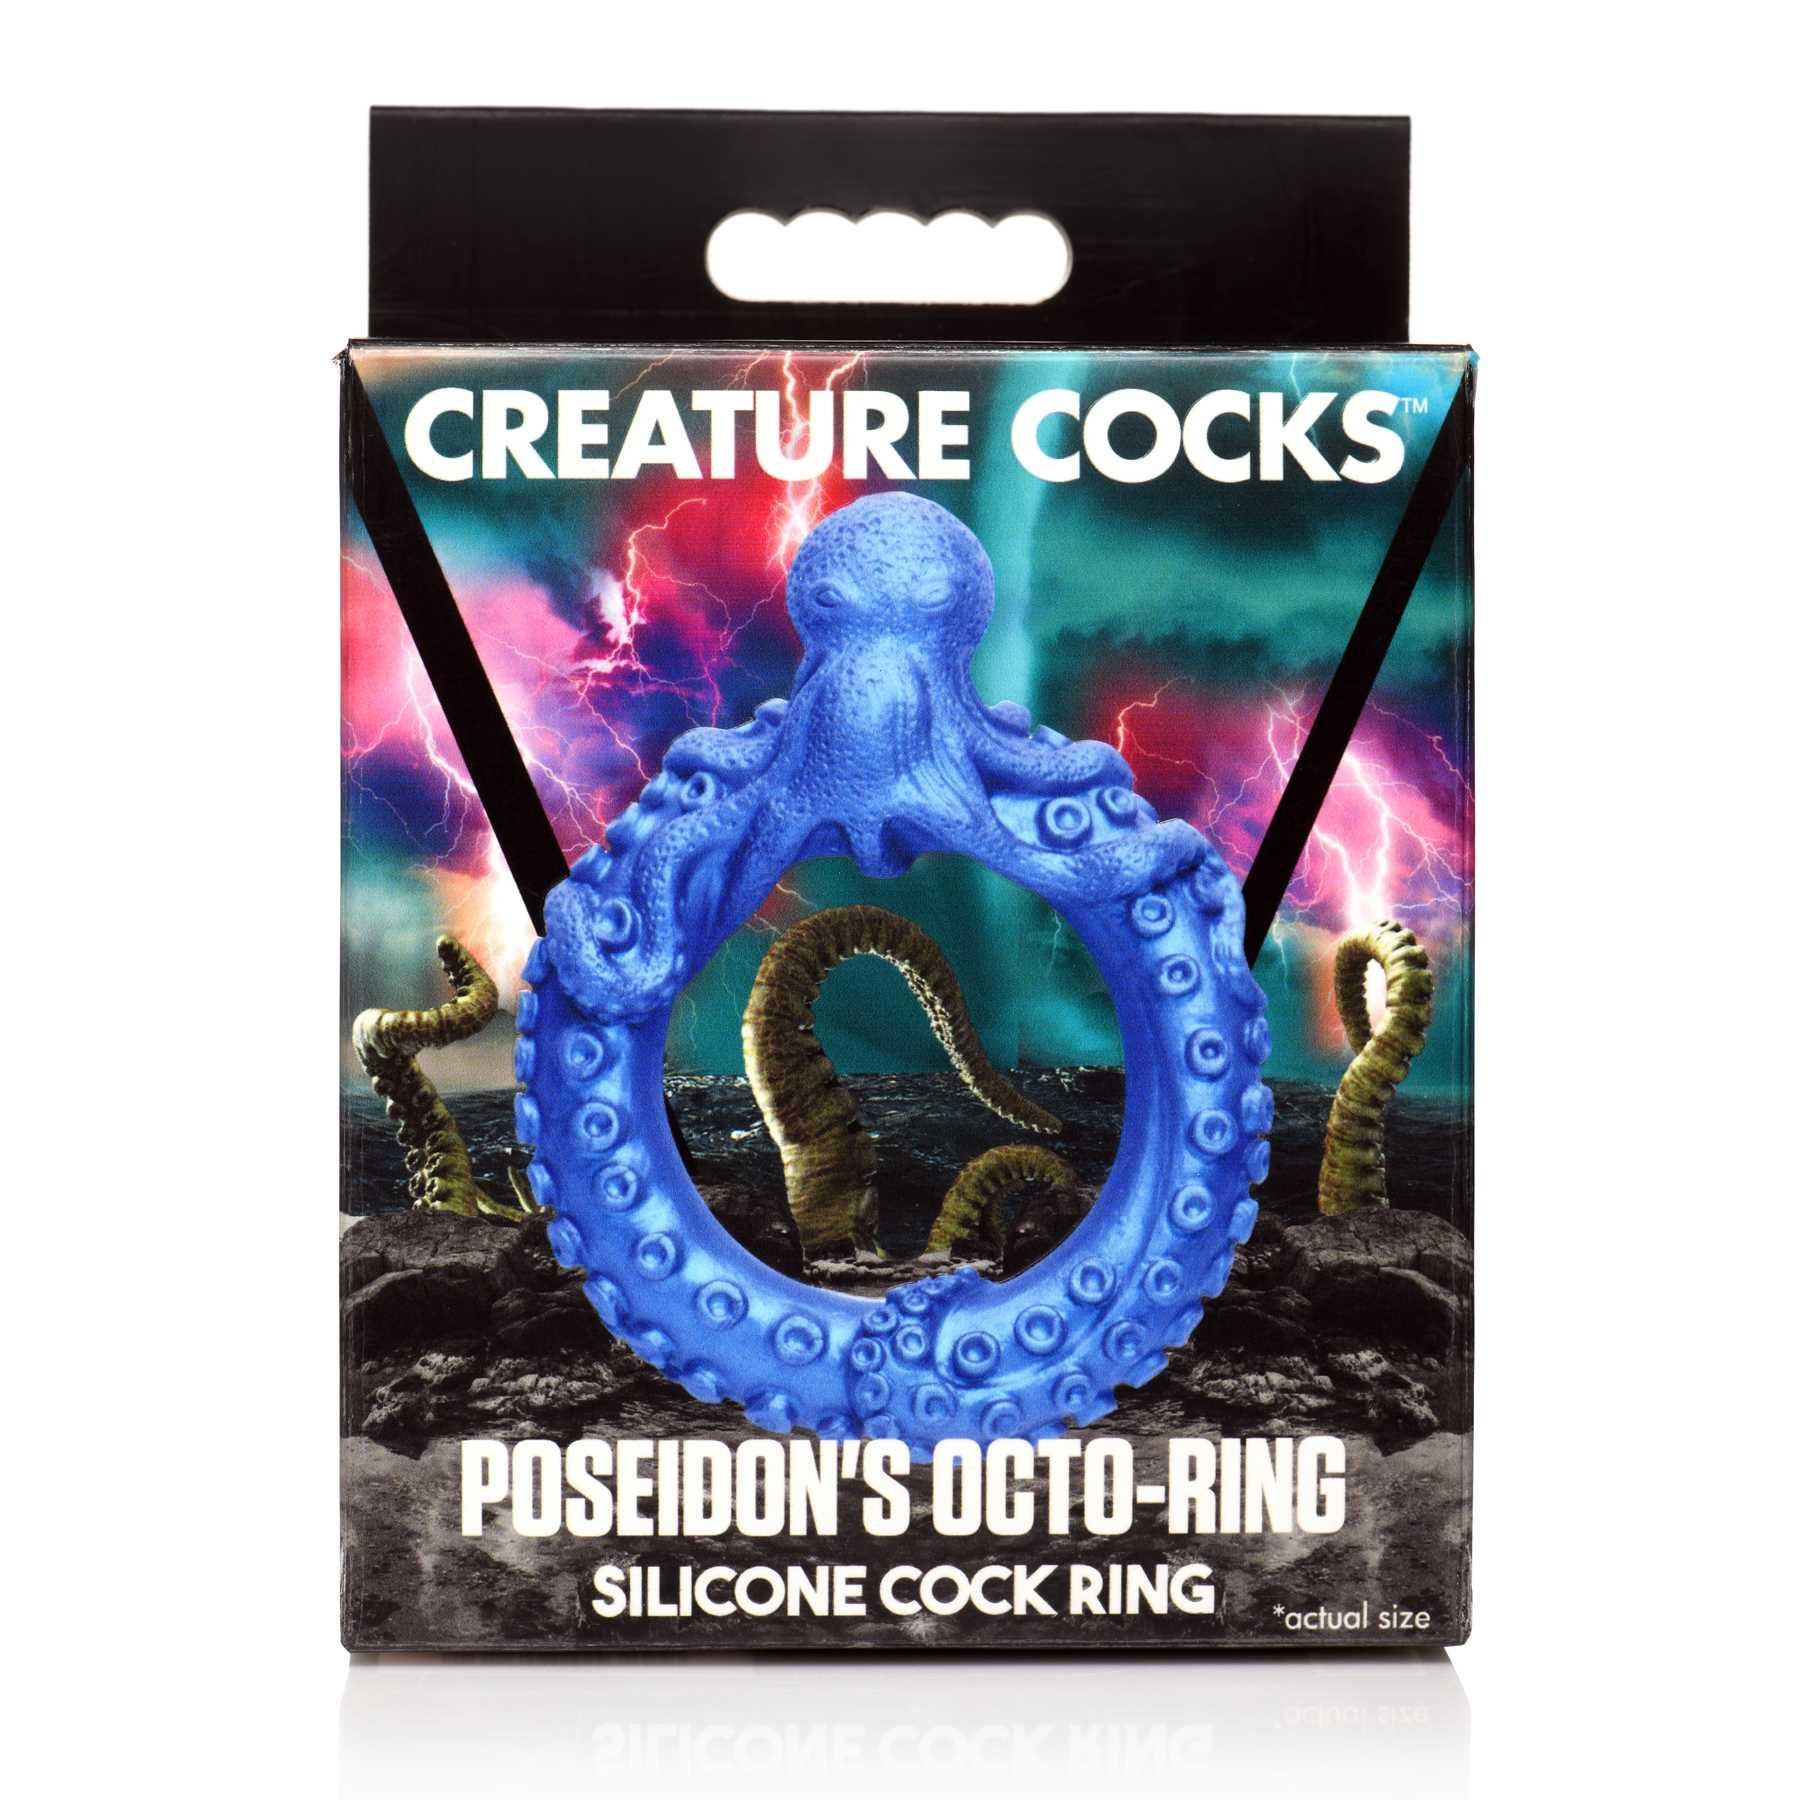 Creature Cocks Poseidon's Octo-Ring Silicone Cock Ring box